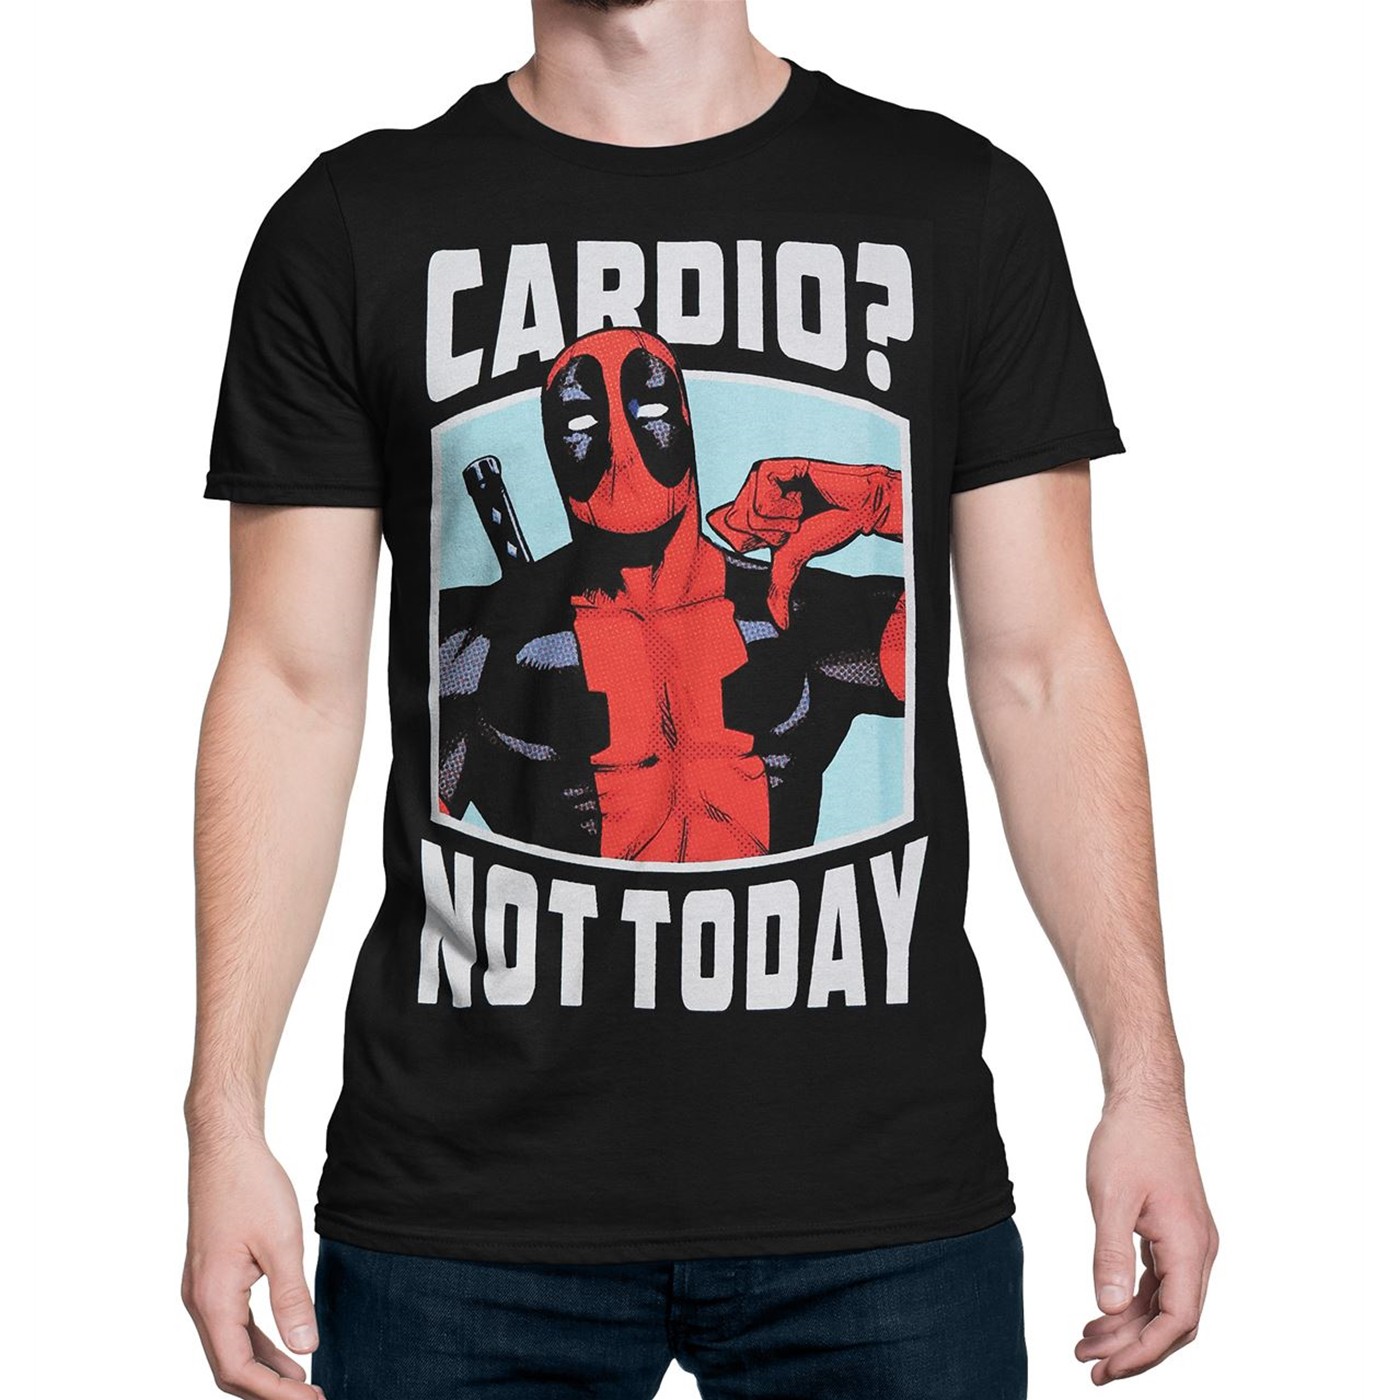 Deadpool Cardio? Not Today Men's T-Shirt